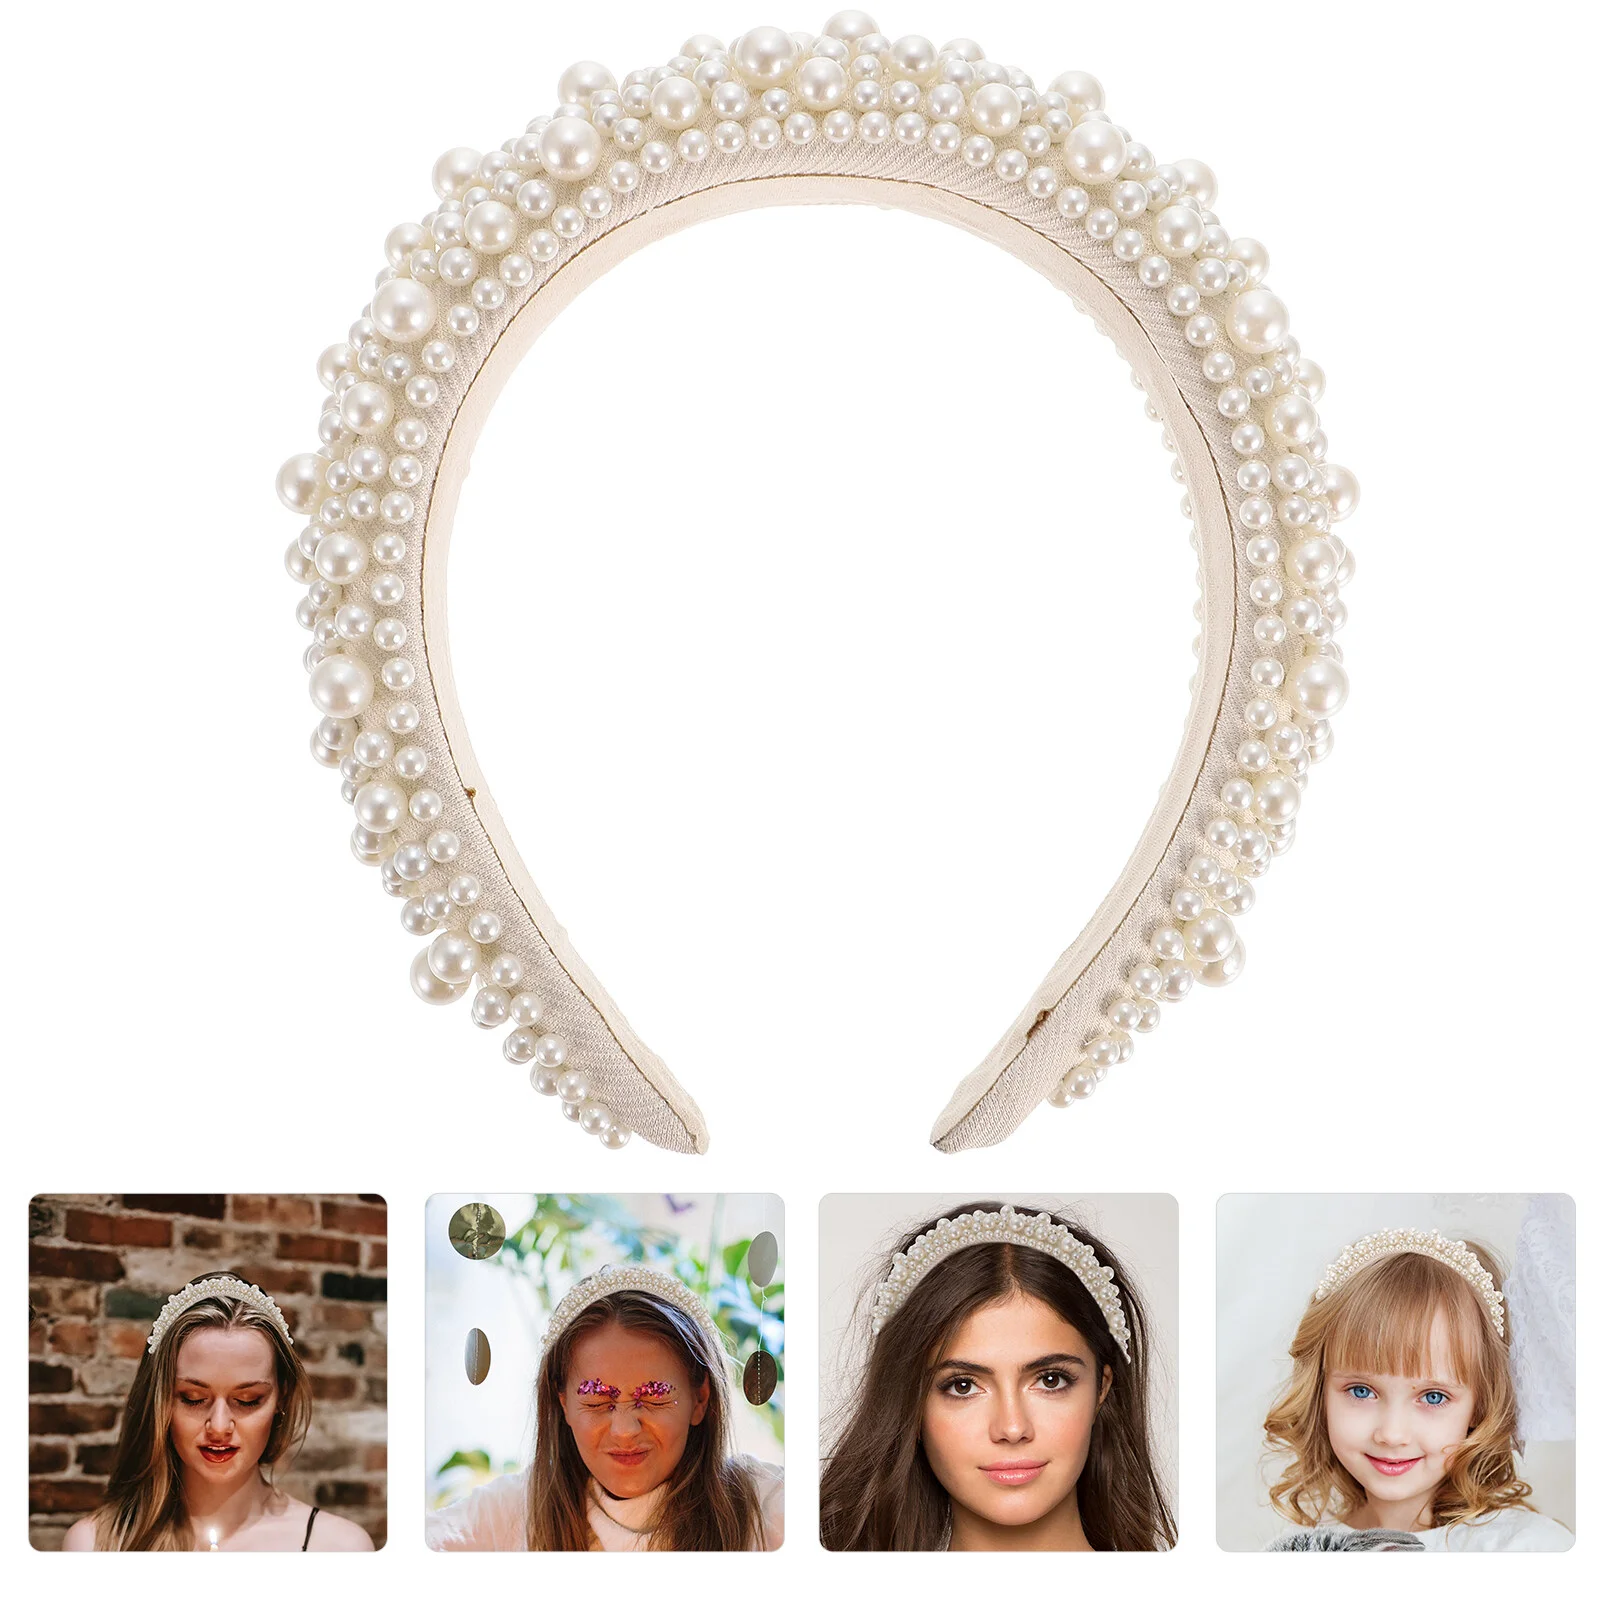 

White Pearl Woman Headdress Headband Accessory Fashion Hairband Crystal Accessories Beading Sponge Creative Bride Headbands